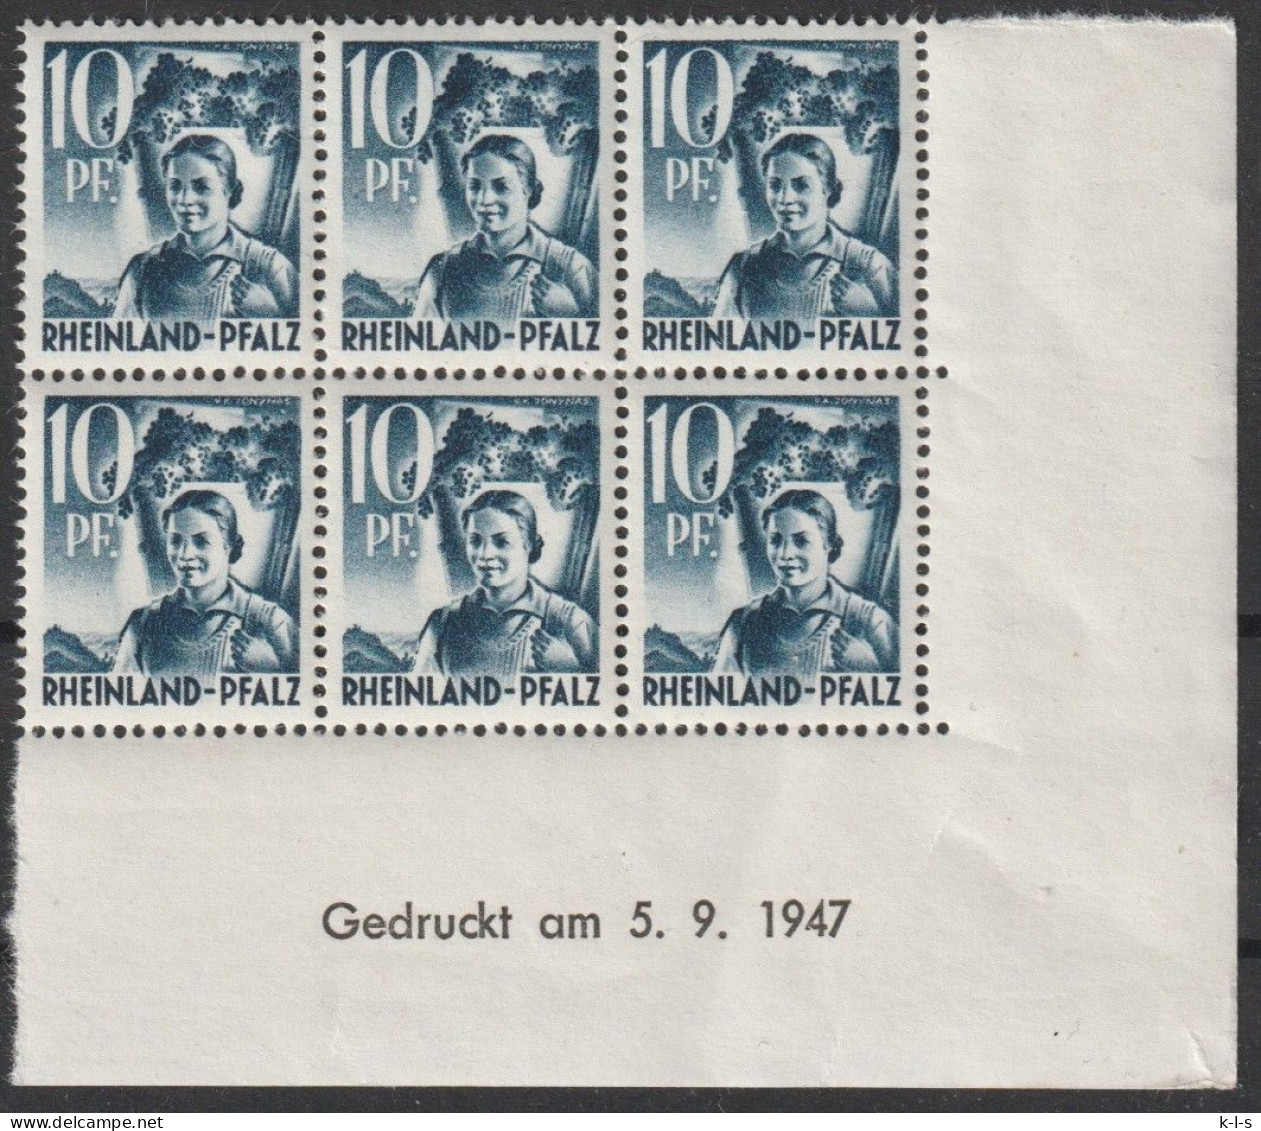 Franz. Zone- Rheinland-Pfalz: 1948, Mi. Nr. 3 Yv Br U, Freimarke:  10 Pfg. Winzerin, Druckdatum 5.9.1957,  **/MNH - Rhine-Palatinate